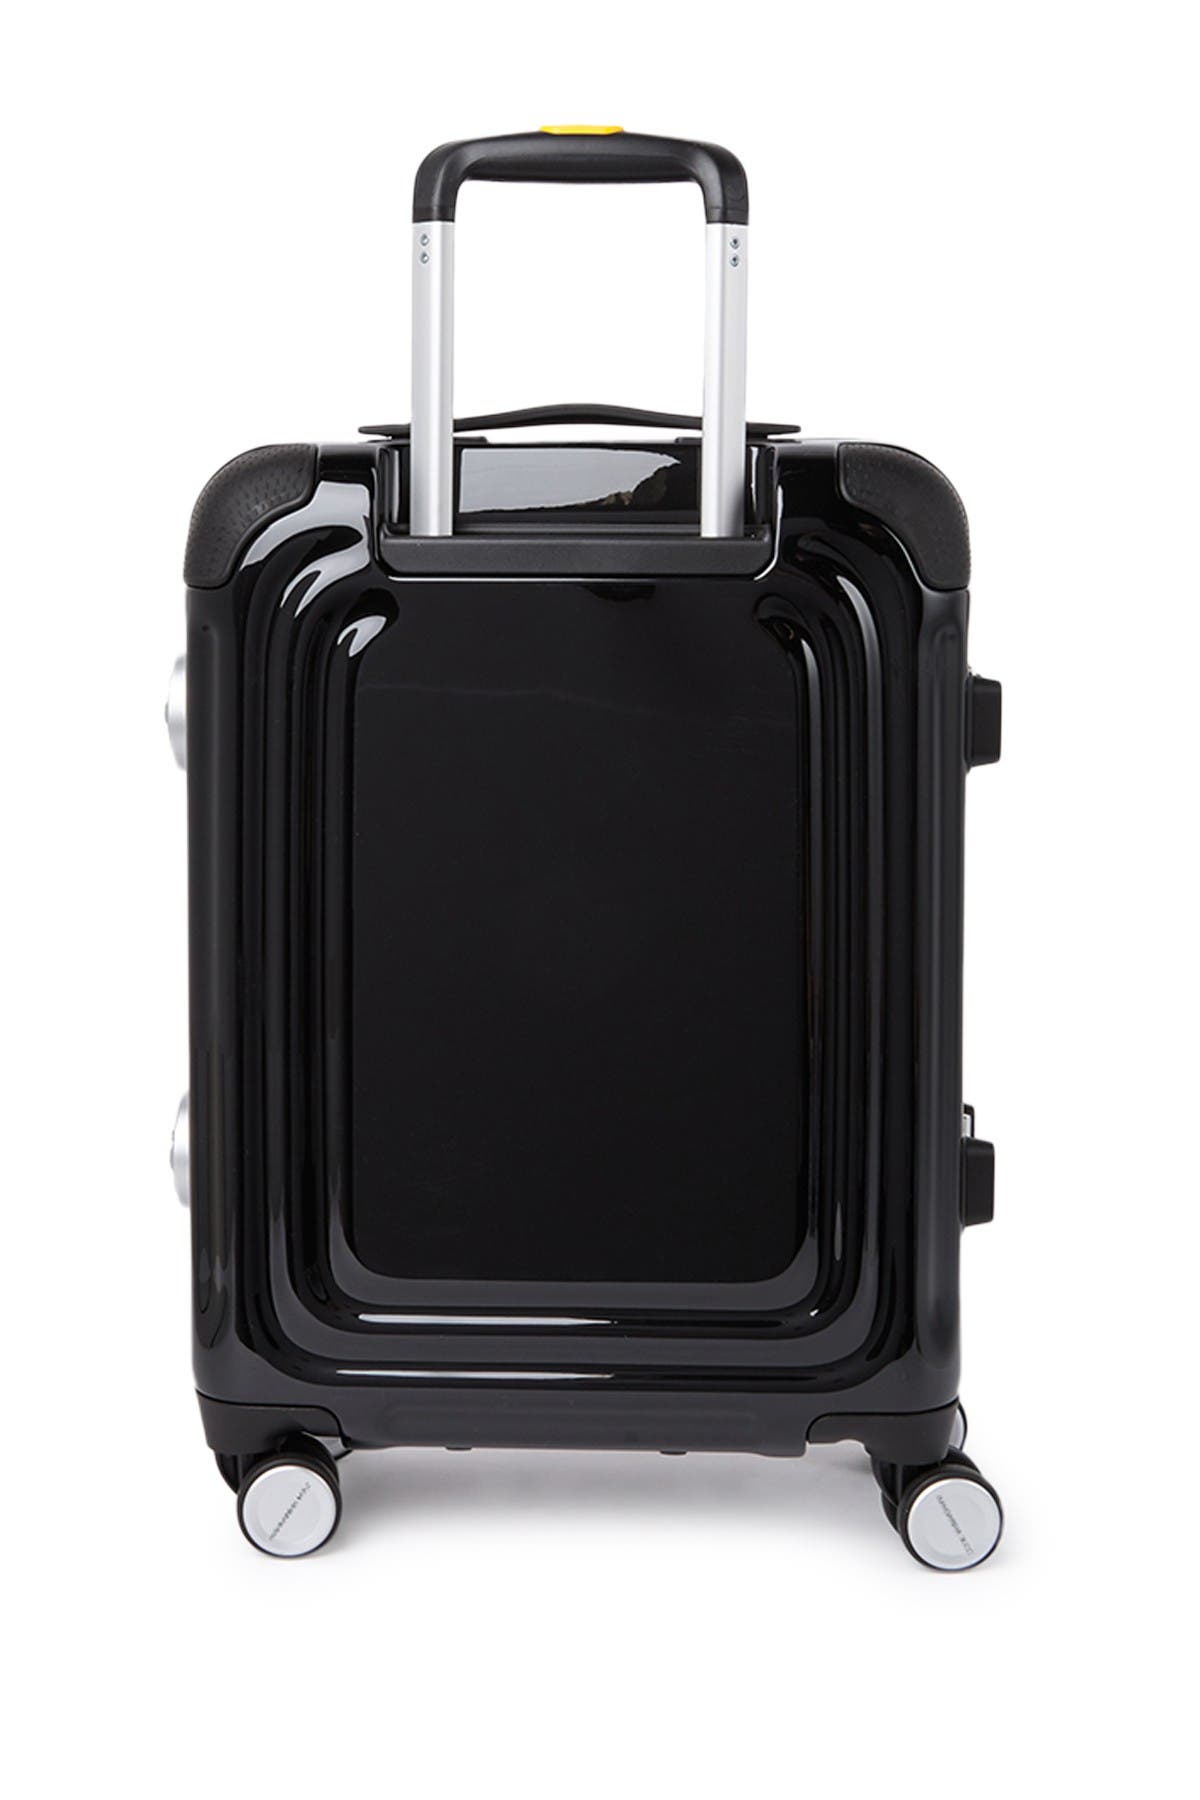 Mandarina Duck C-frame Cabin Low Trolley Hardshell Luggage In Black